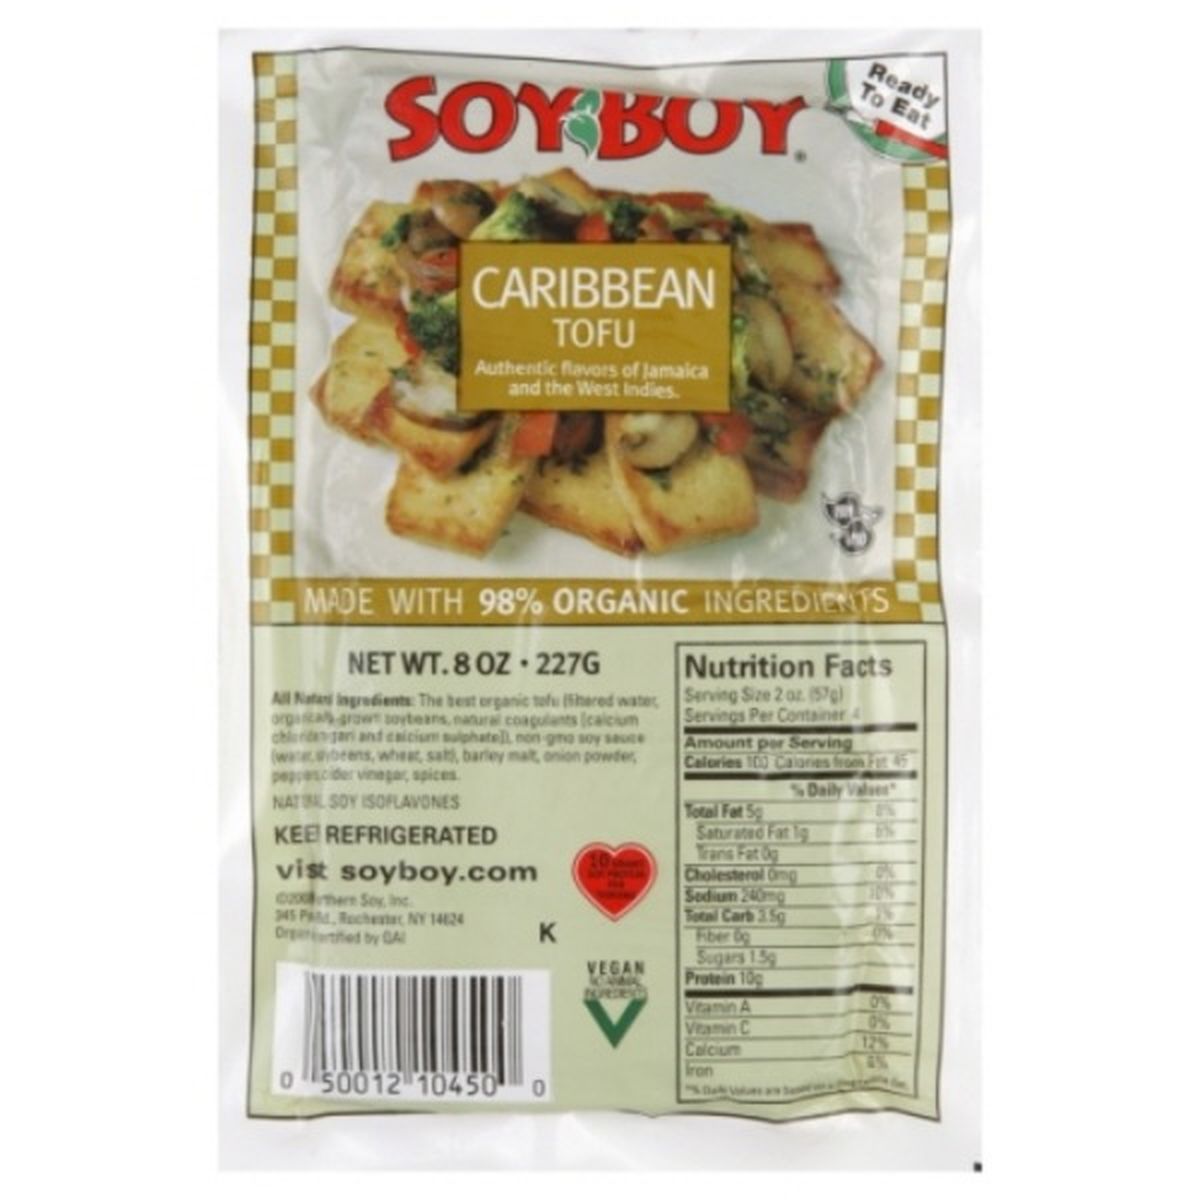 Calories in Soy Boy Tofu, Caribbean